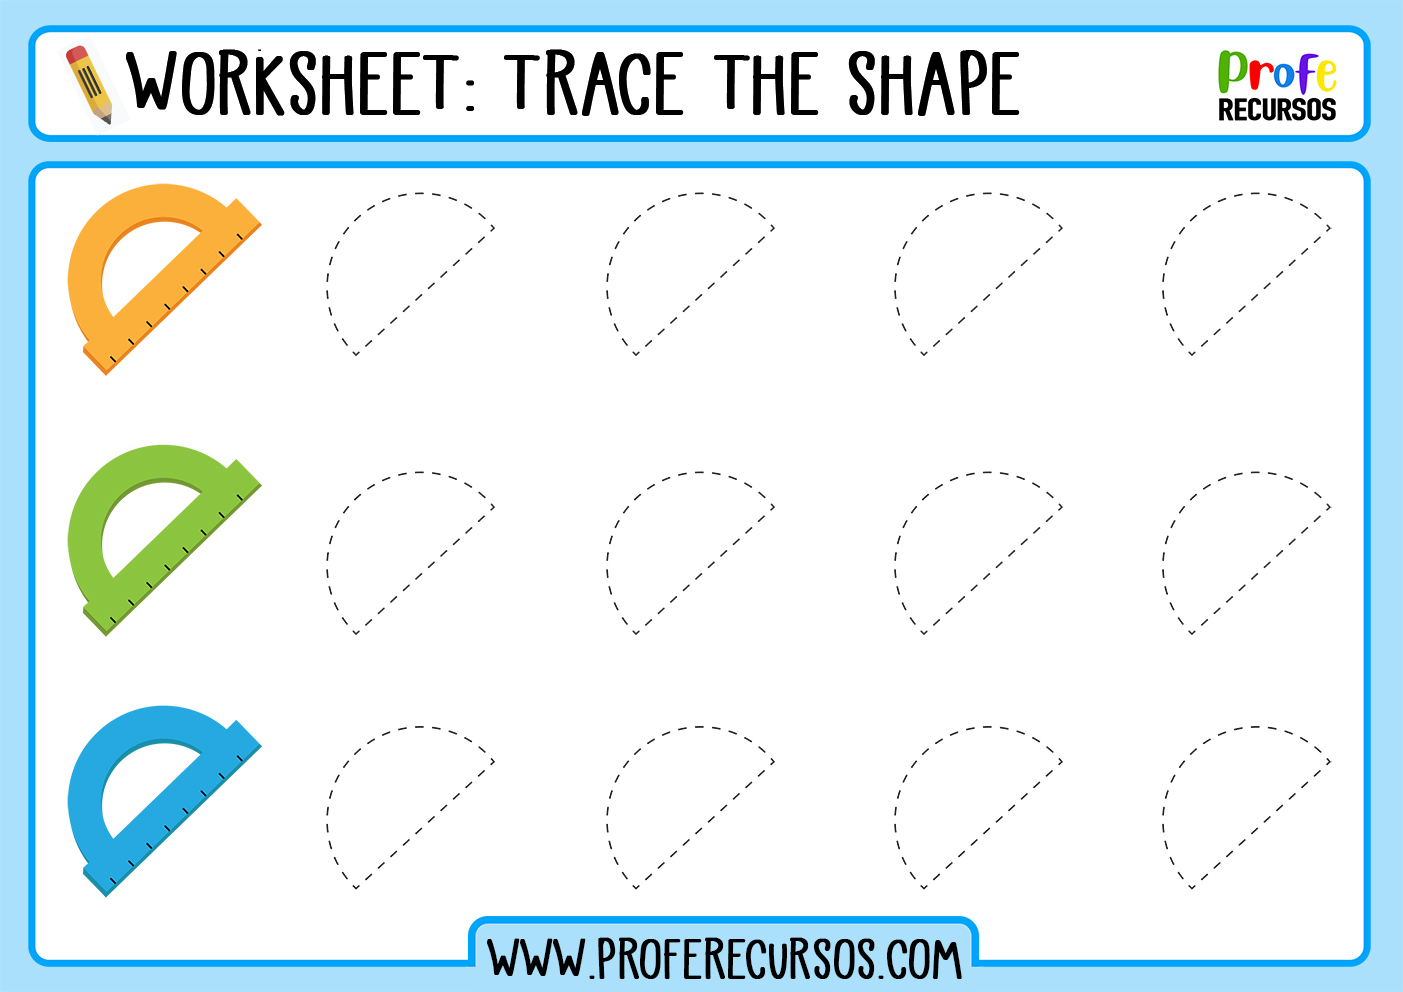 Tracing exercises for preschool